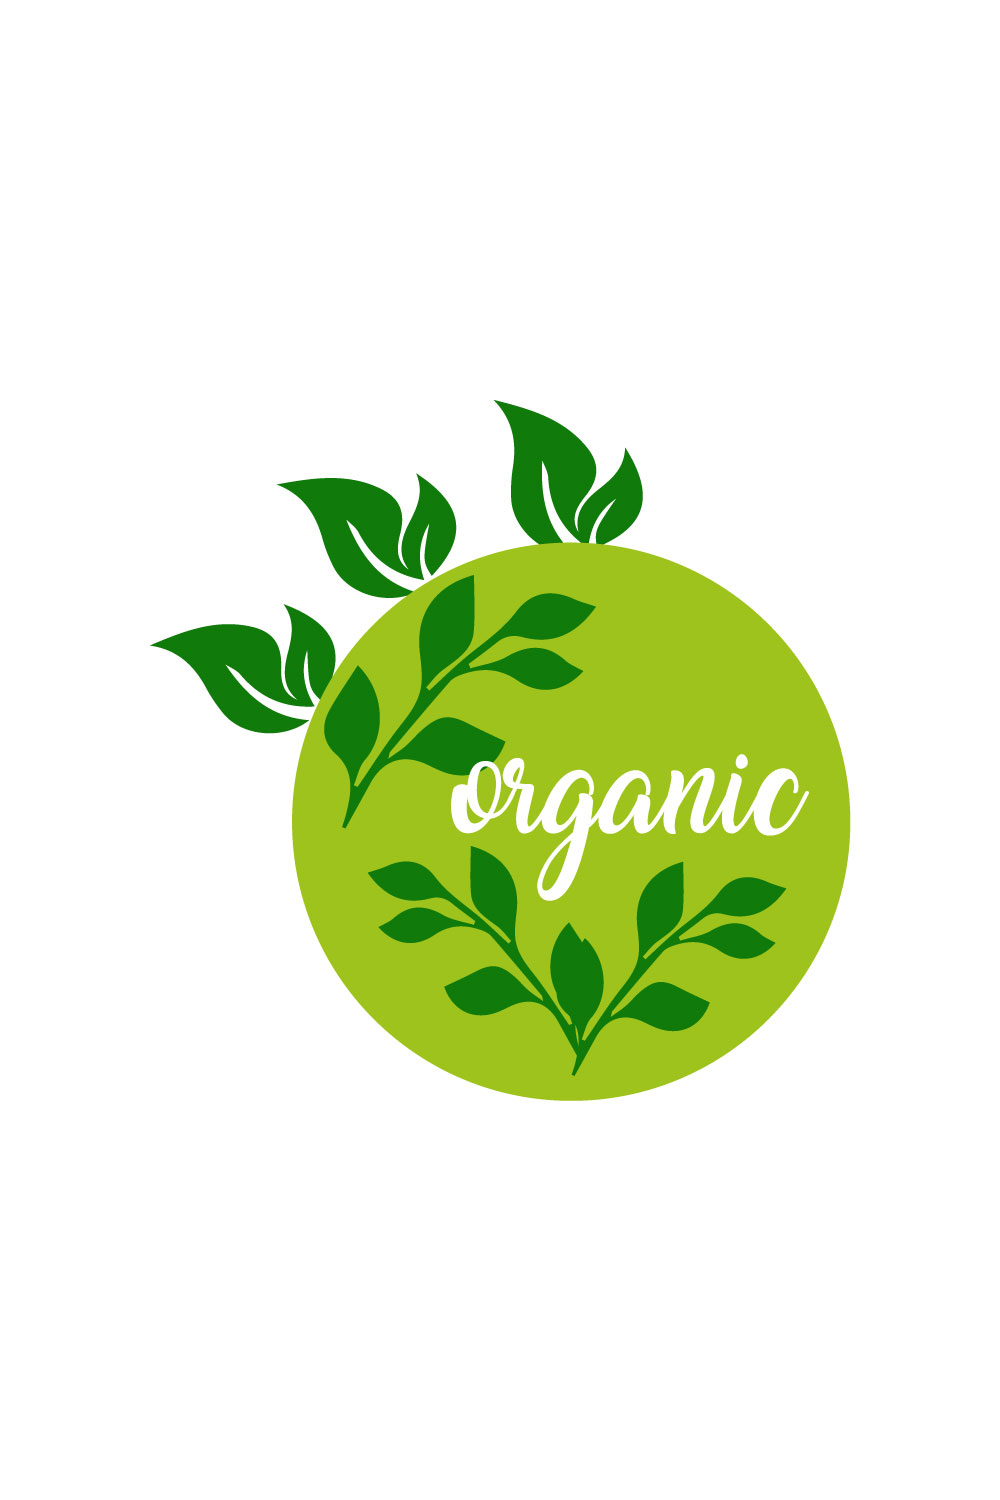 Free organic vegetables logo pinterest preview image.